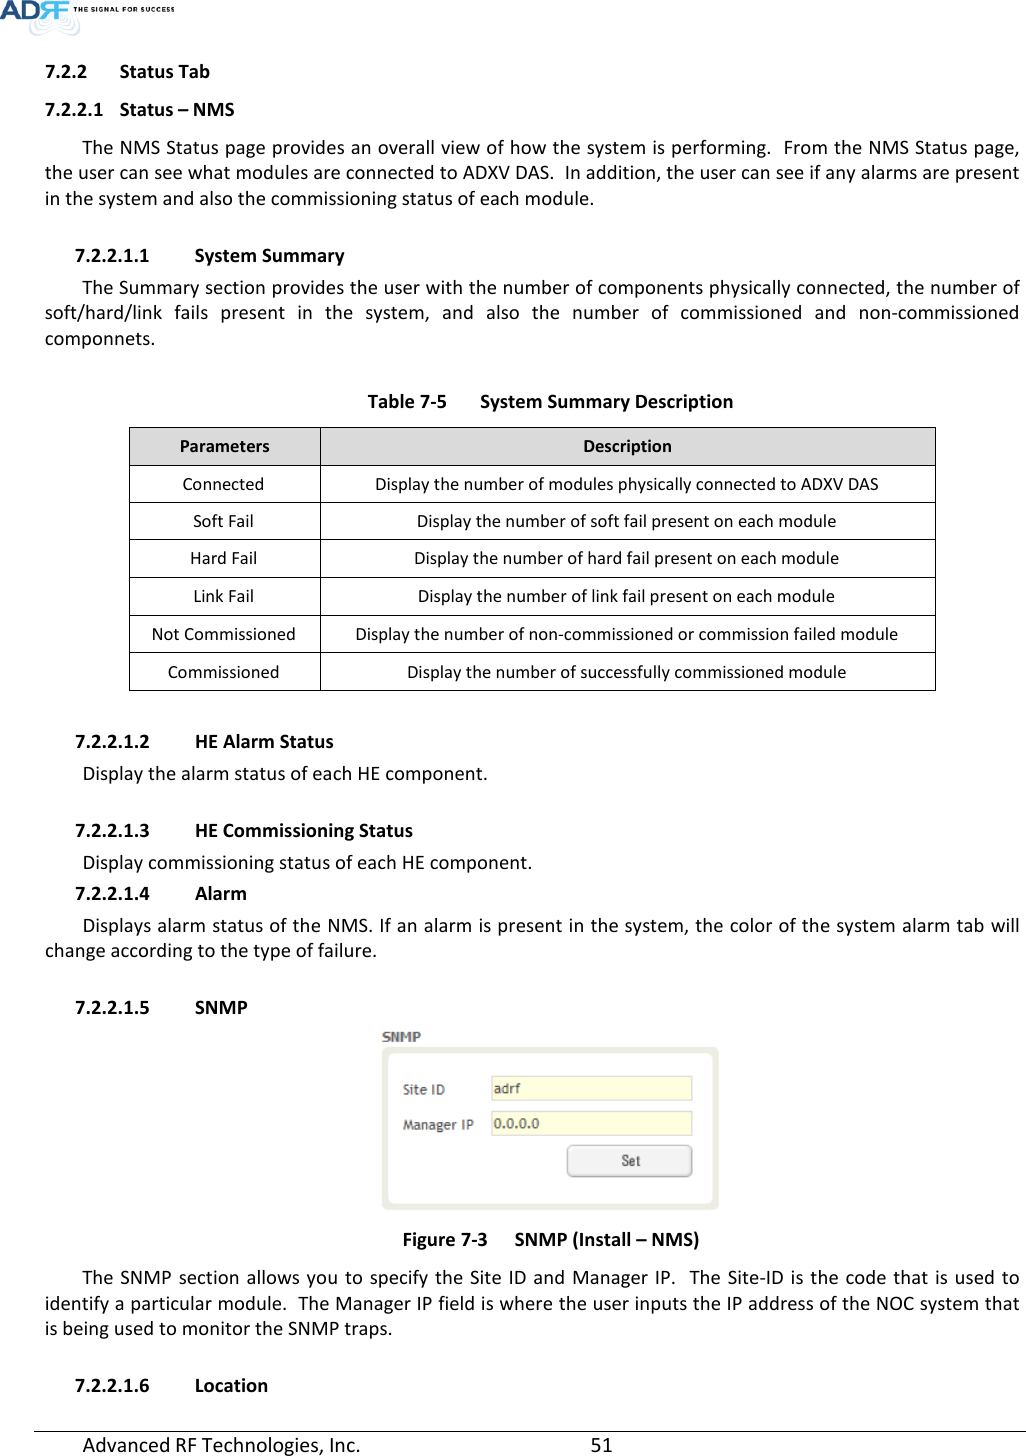 Page 51 of ADRF KOREA ADXV-R-336 DAS (Distributed Antenna System) User Manual ADXV DAS